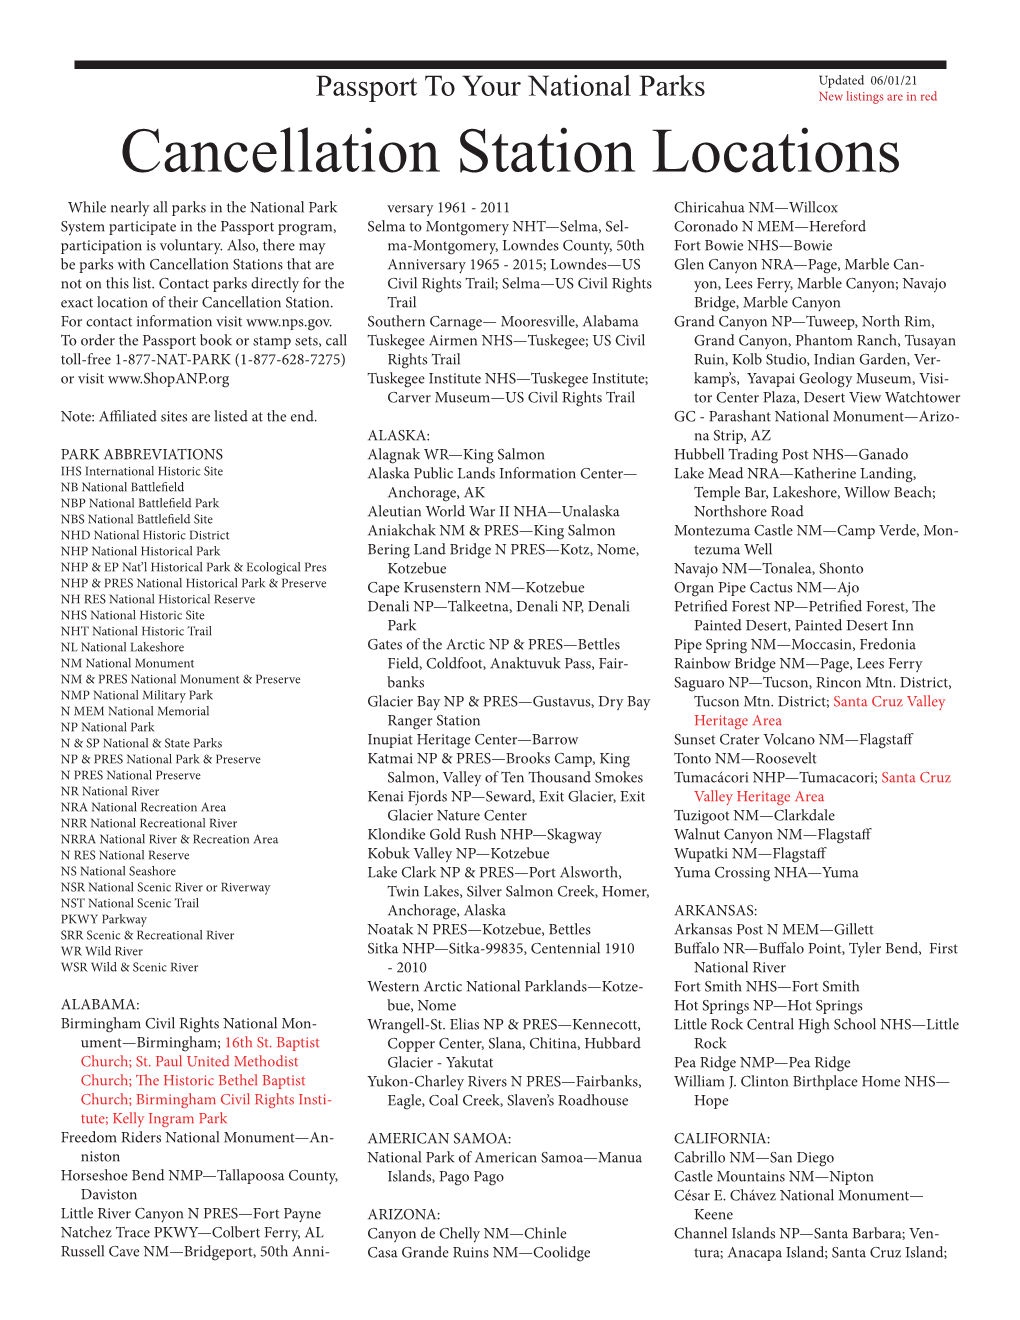 Cancellation Station Locations